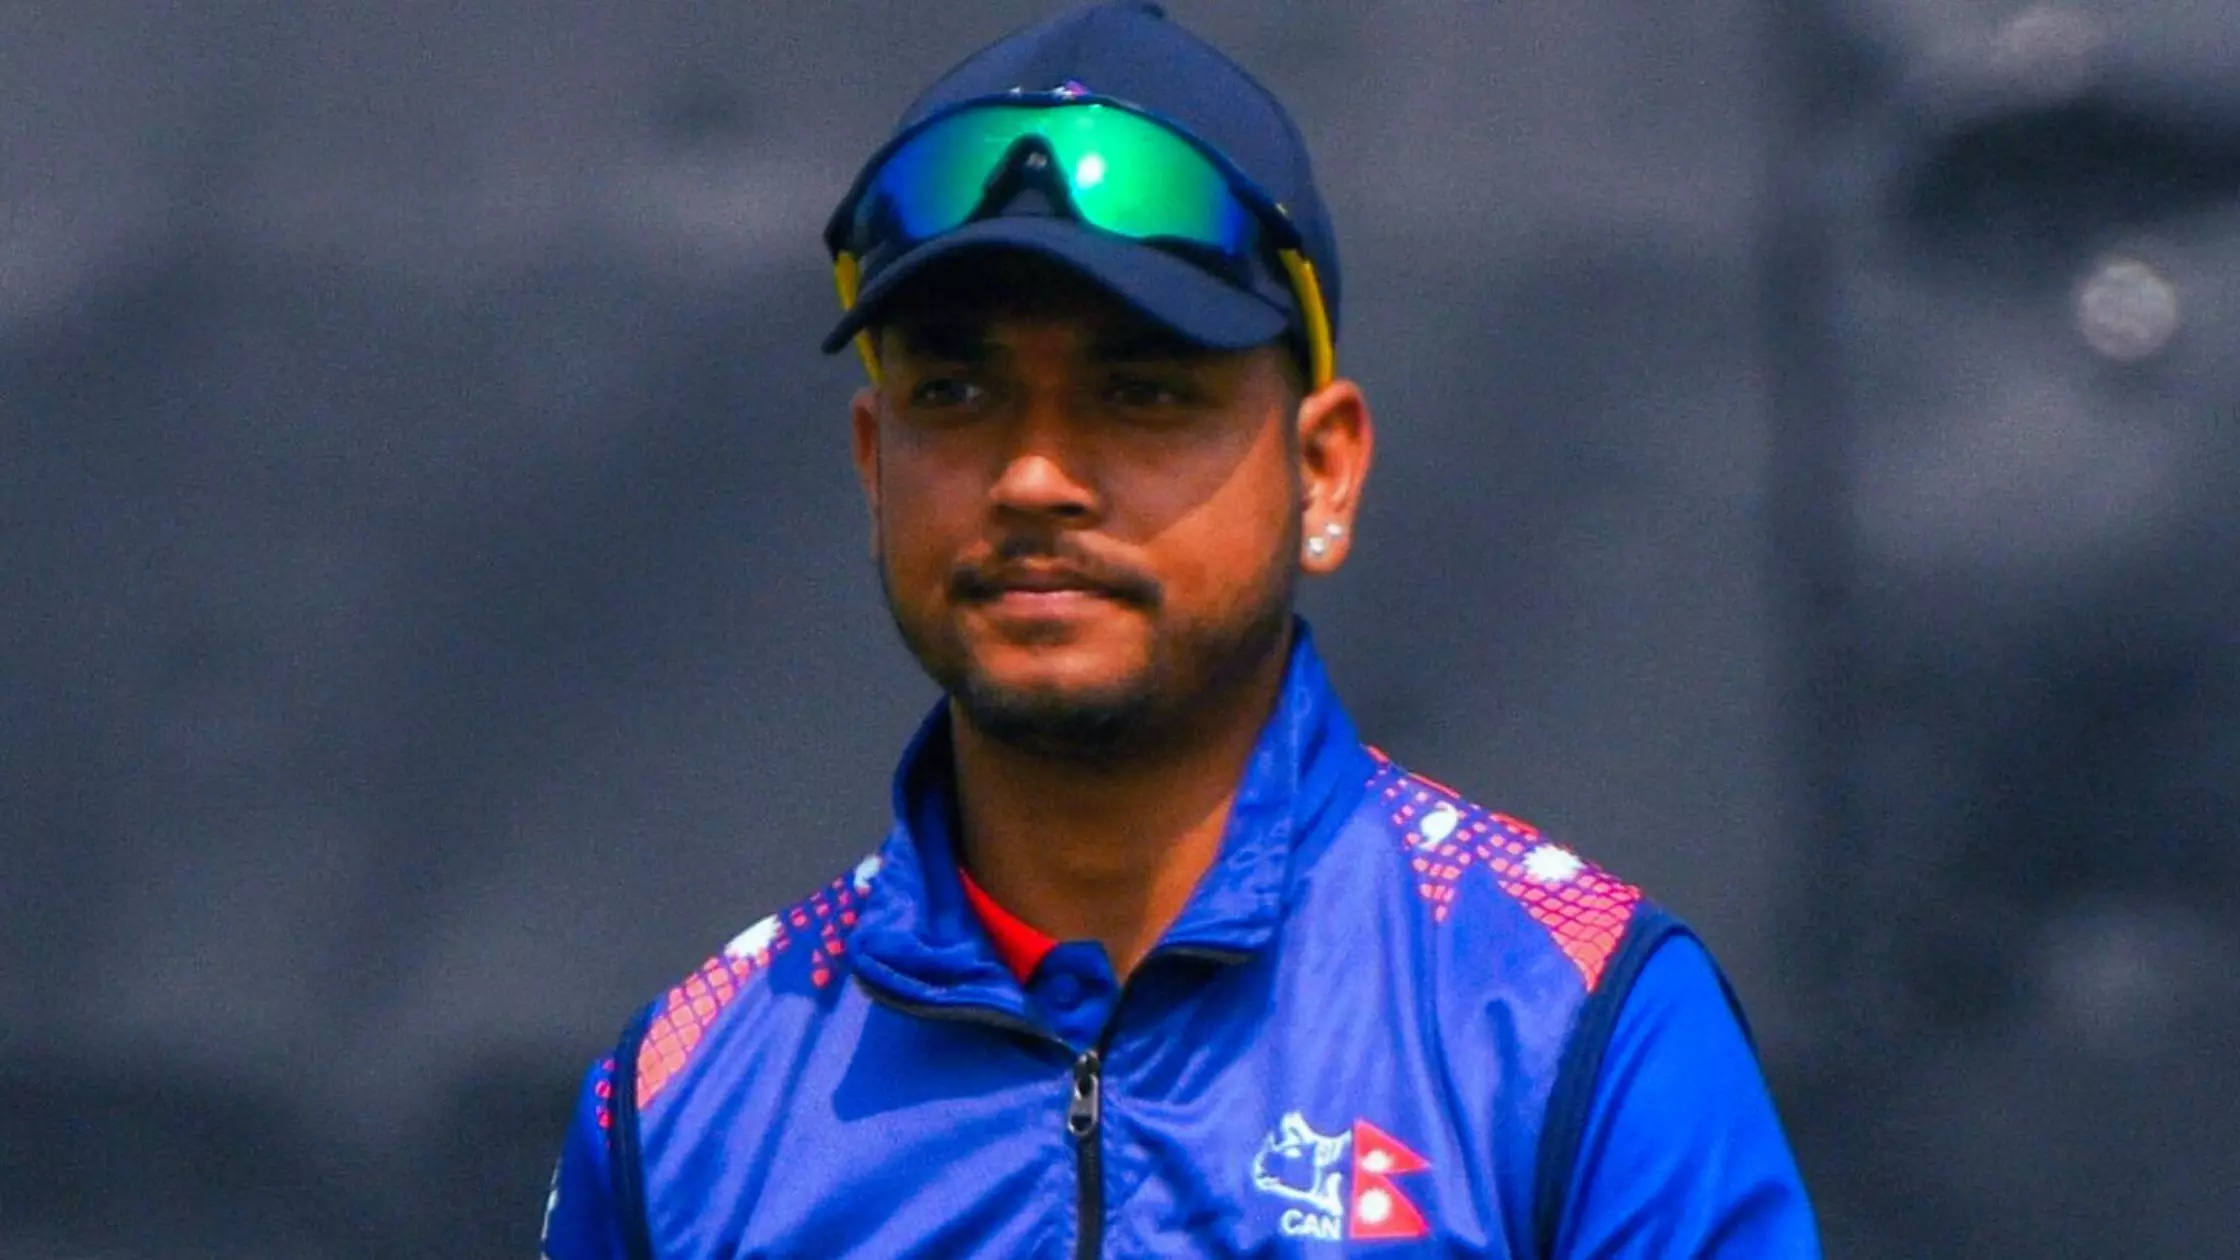 Nepal star cricketer Sandeep Lamichhane